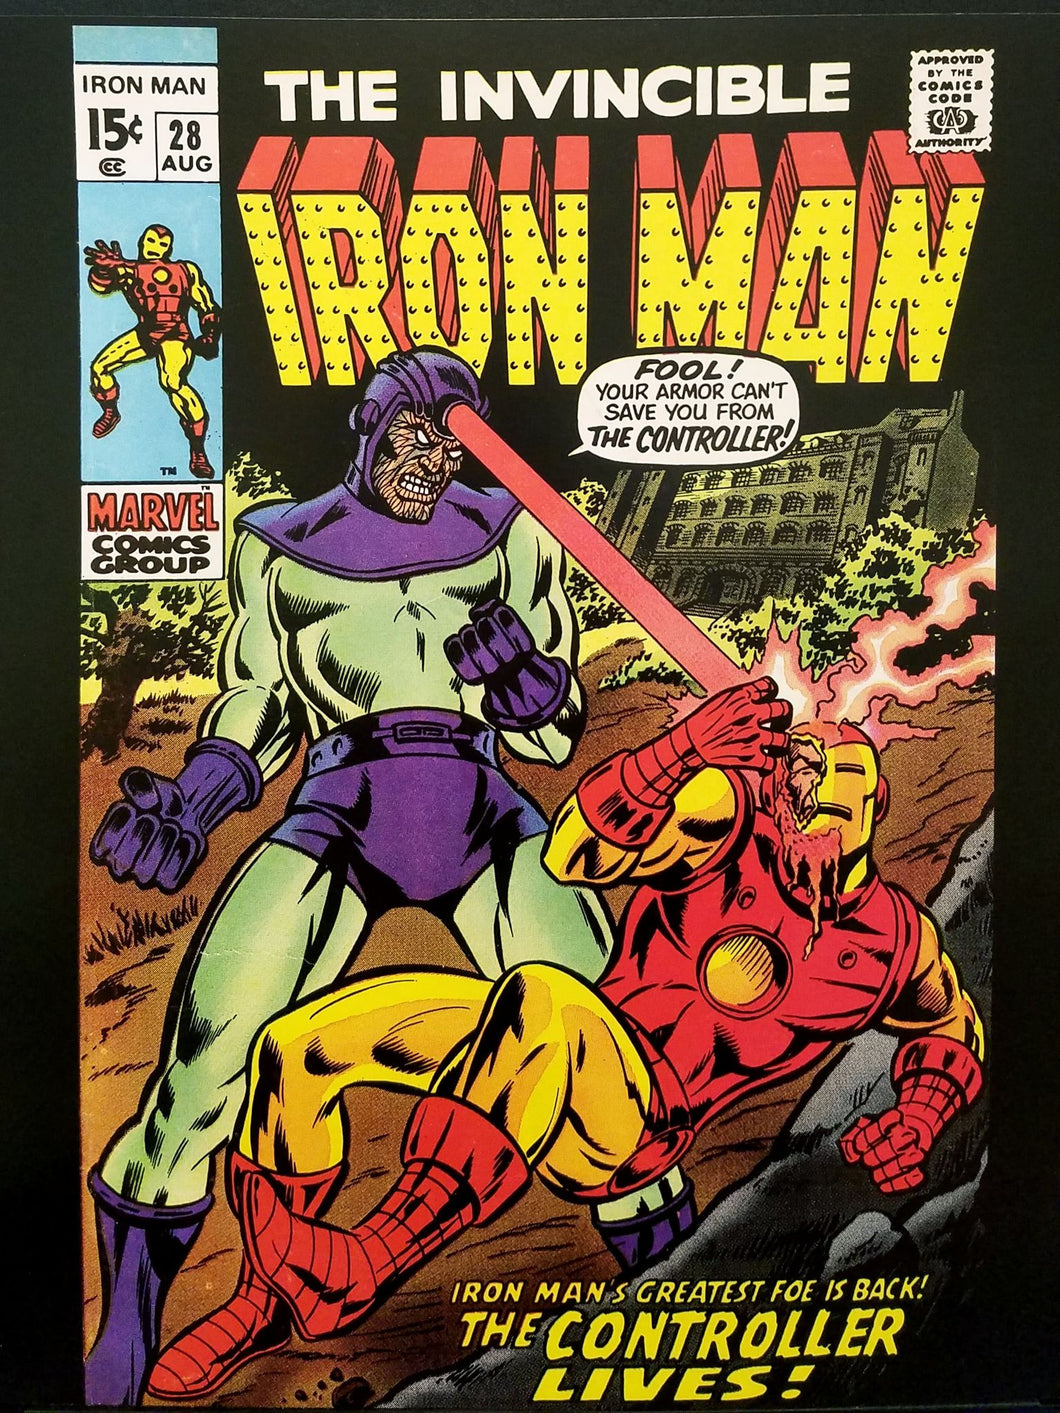 Iron Man #28 by Marie Severin 11x14 FRAMED Art Print, Vintage 1970 Marvel Comics